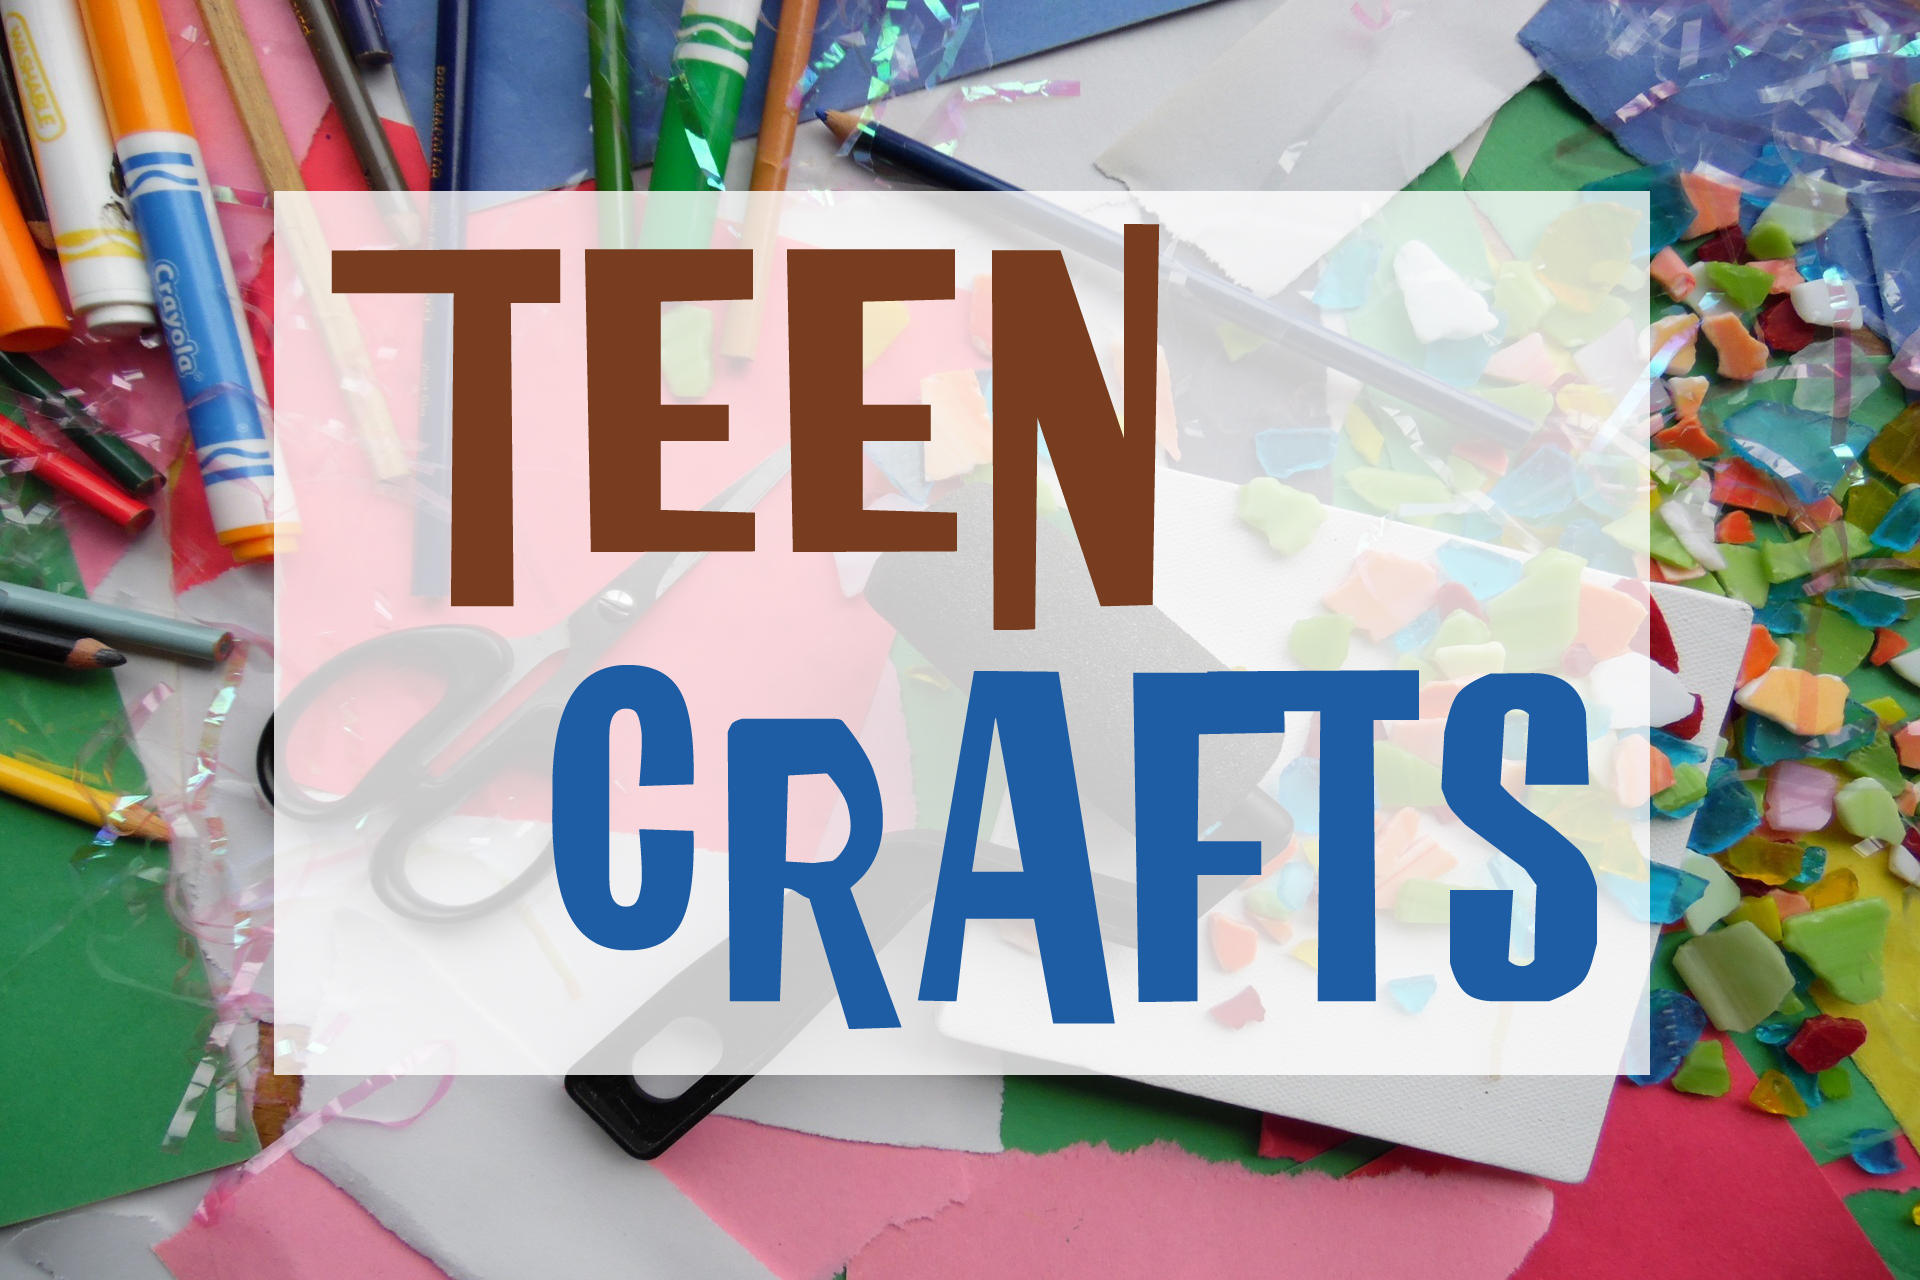 Craft Teen 117